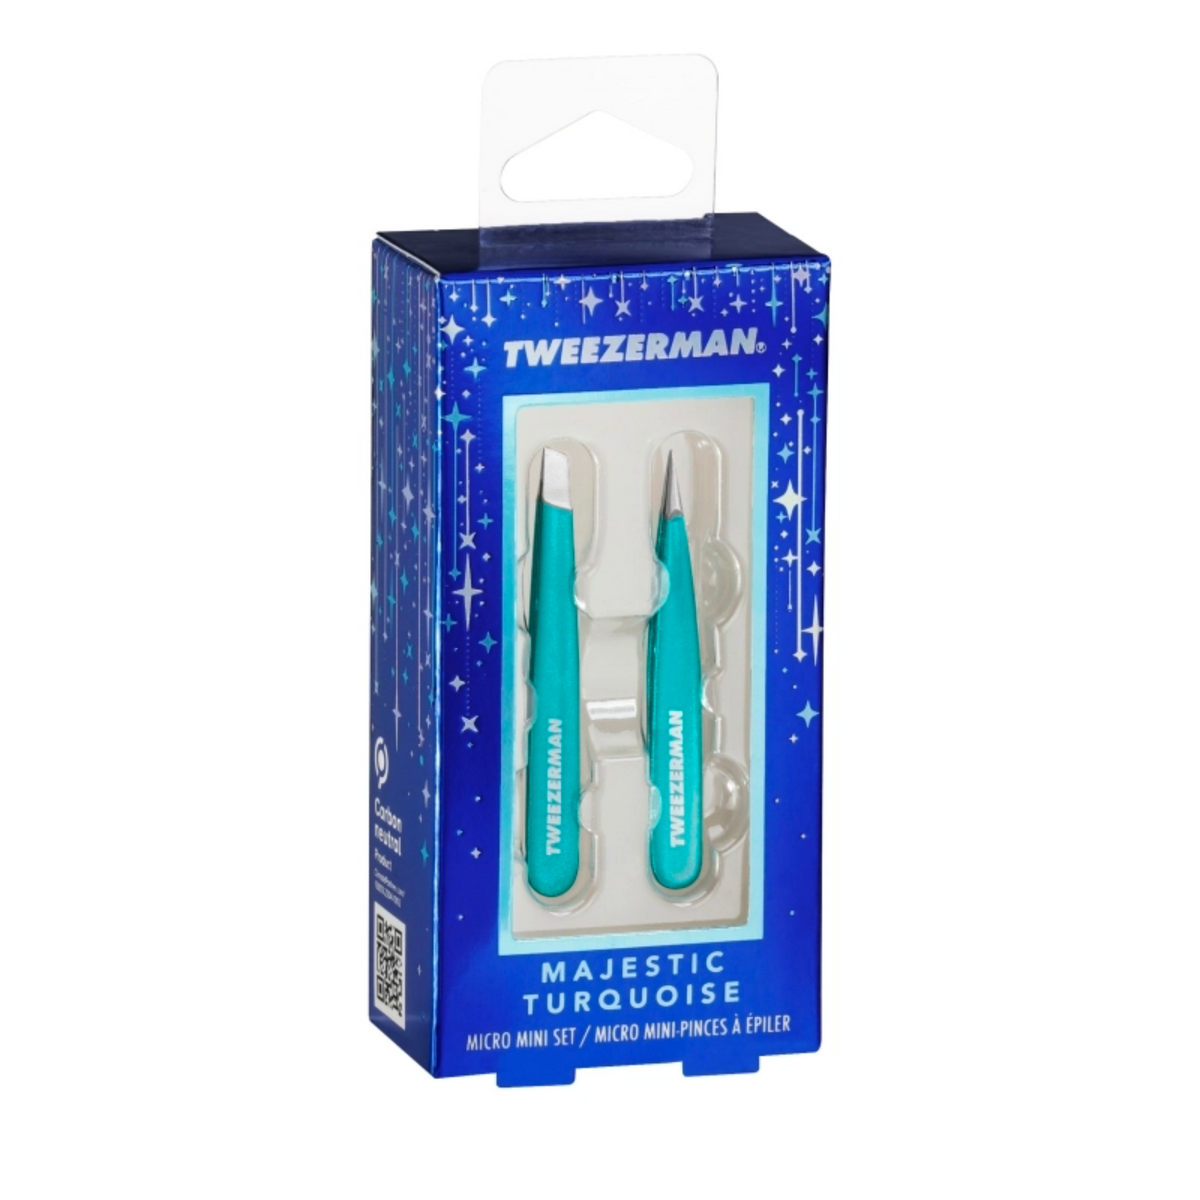 Primary Image of Holiday Majestic Turquoise Micro Mini Set